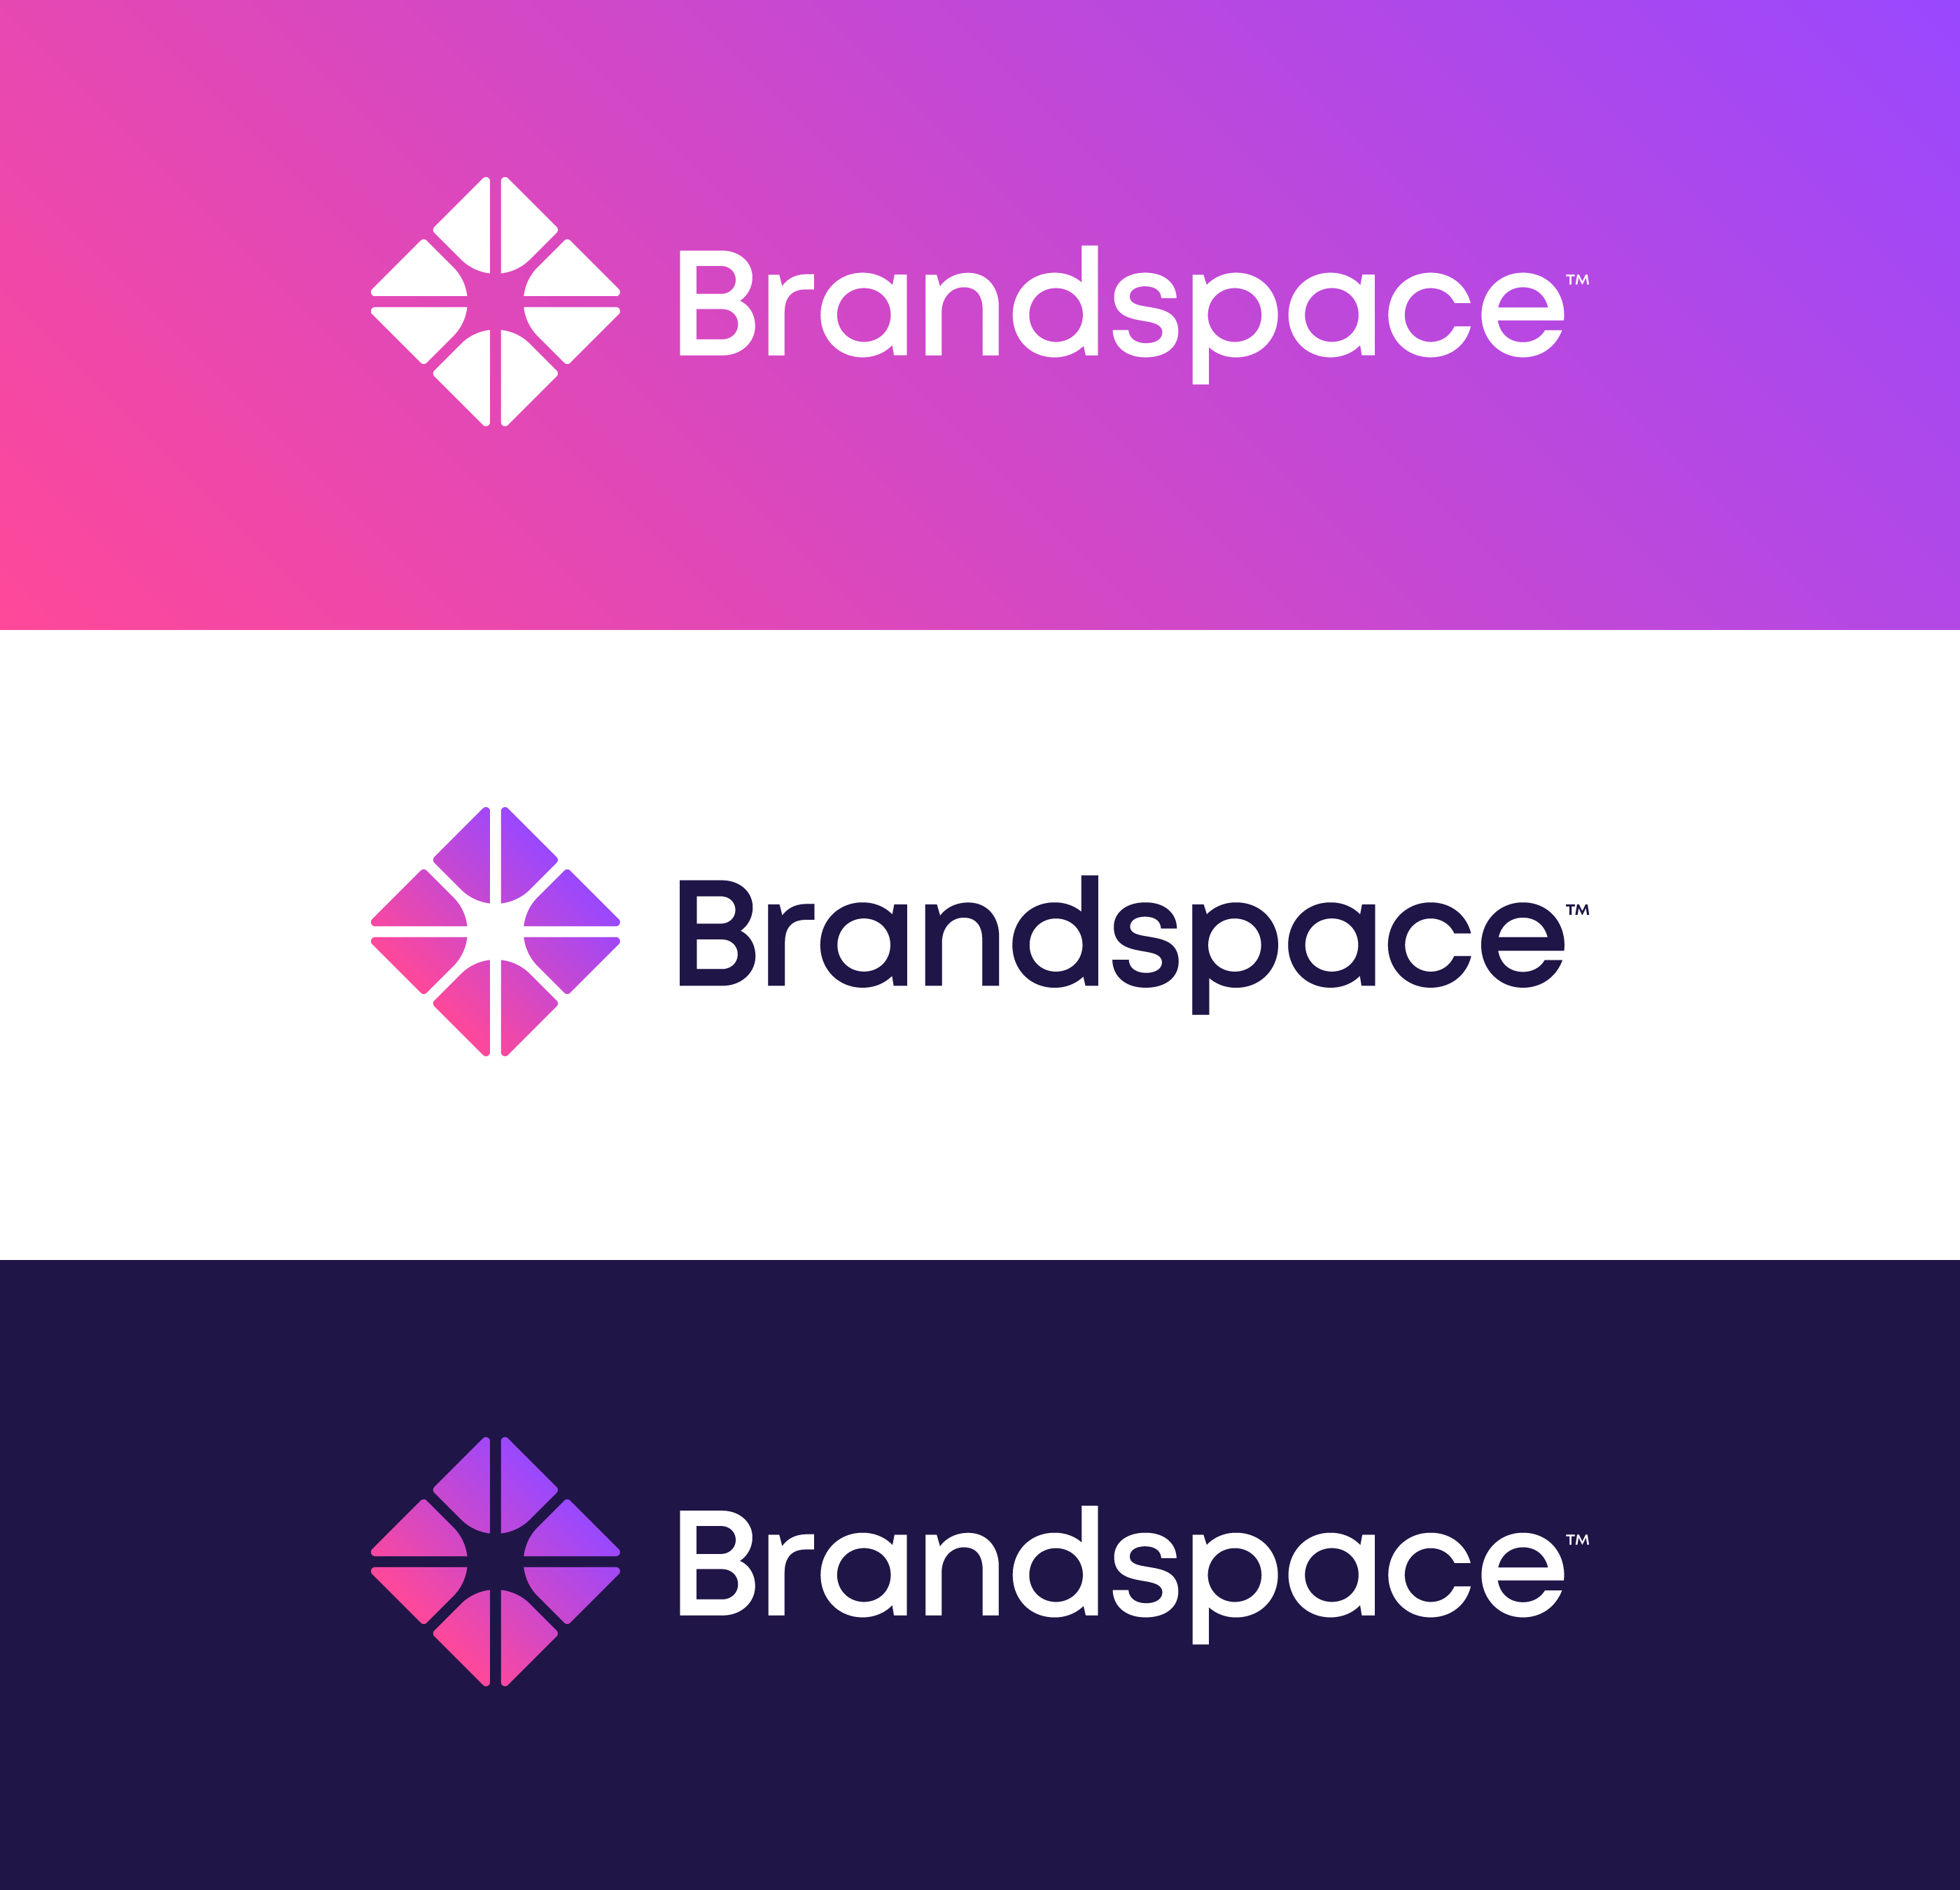 Brandspace_Image3